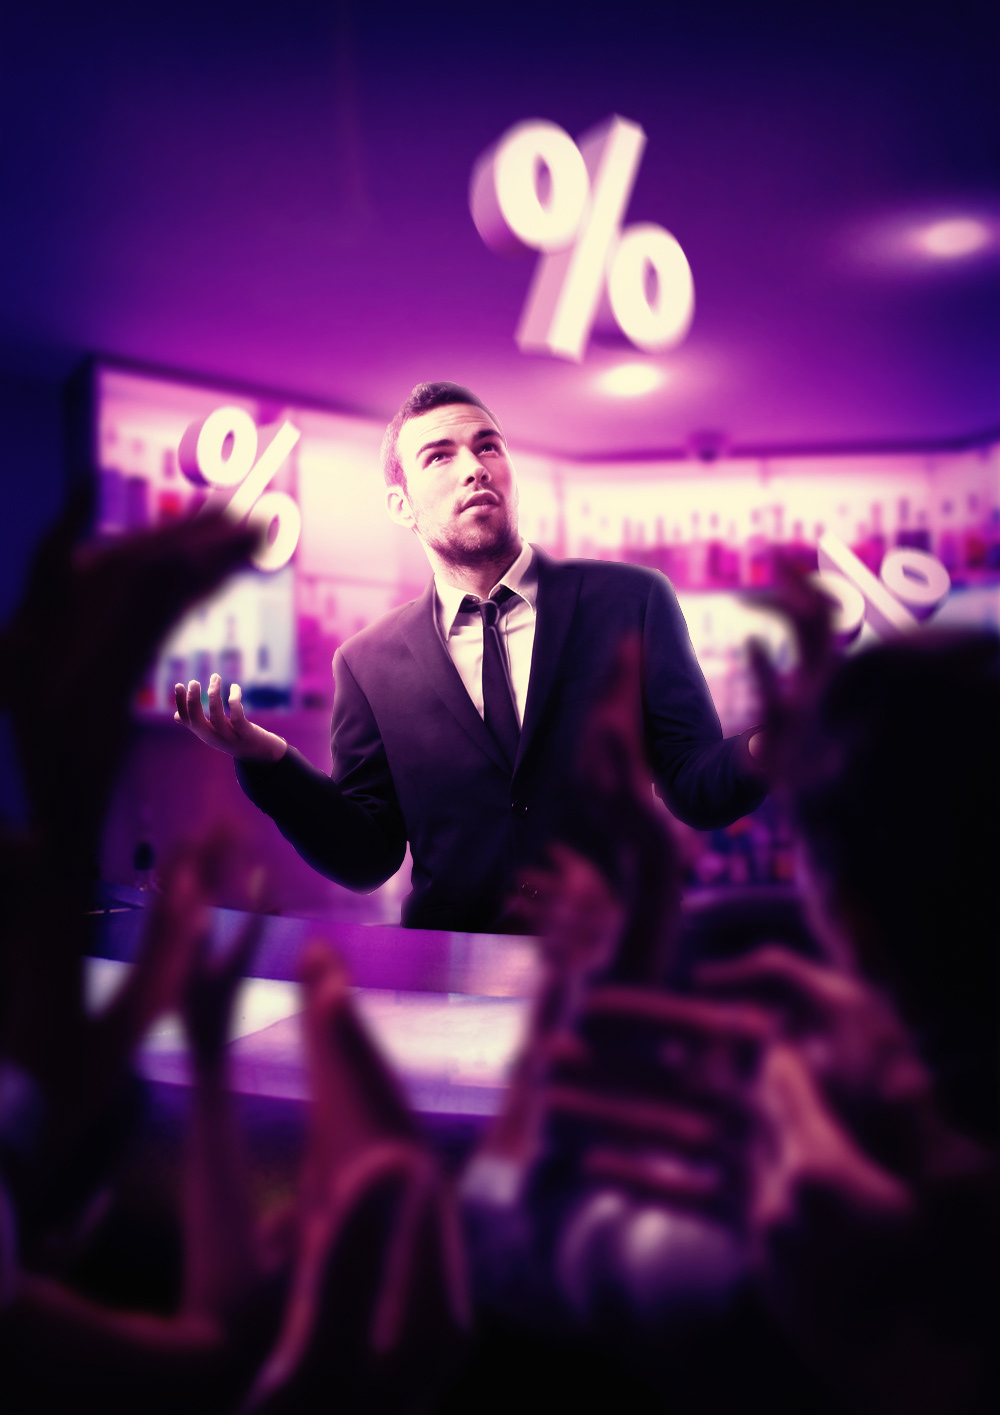 applause bar bartender business discounts interest purple sale